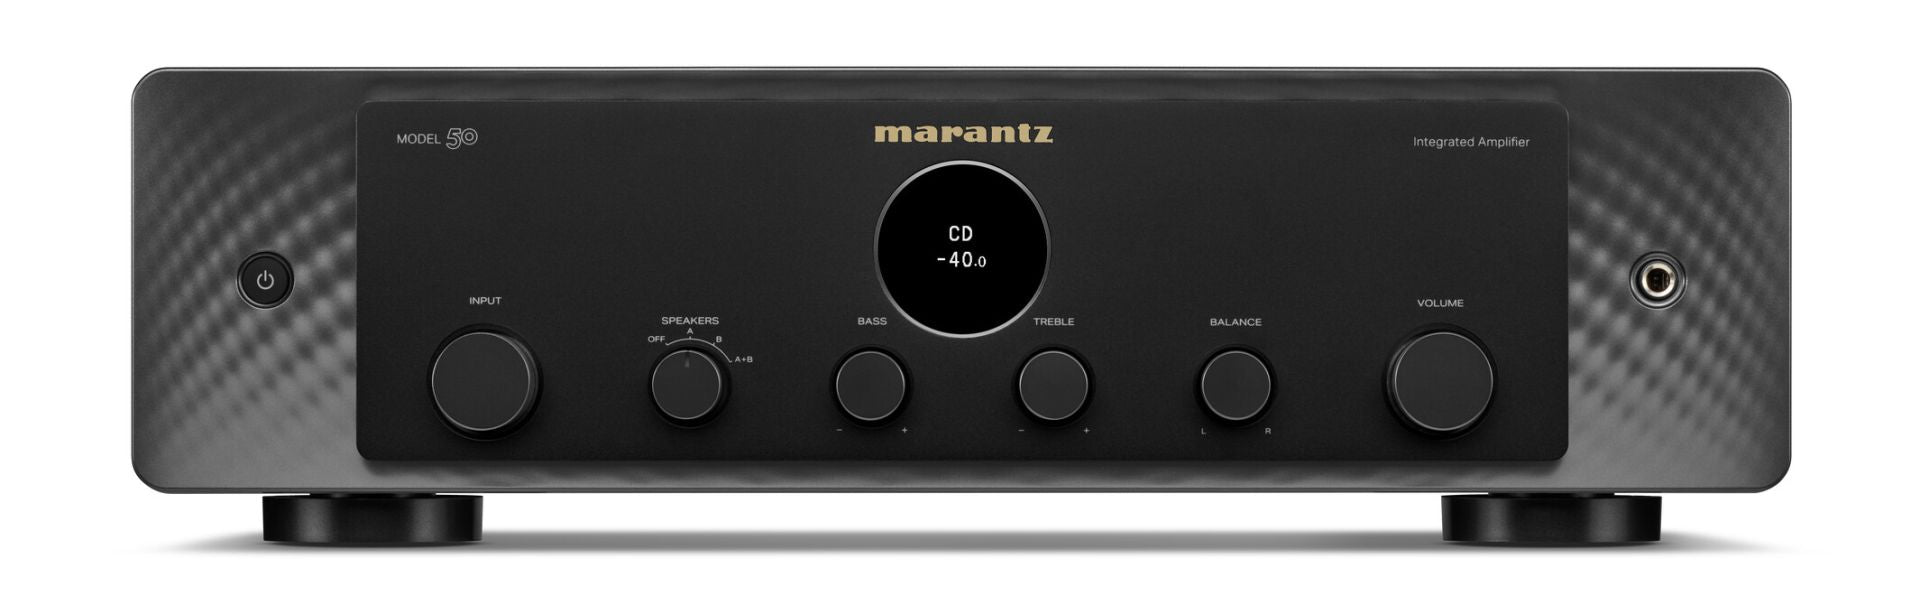 Marantz model 50 nero amplificatore integrato 2x70 watt